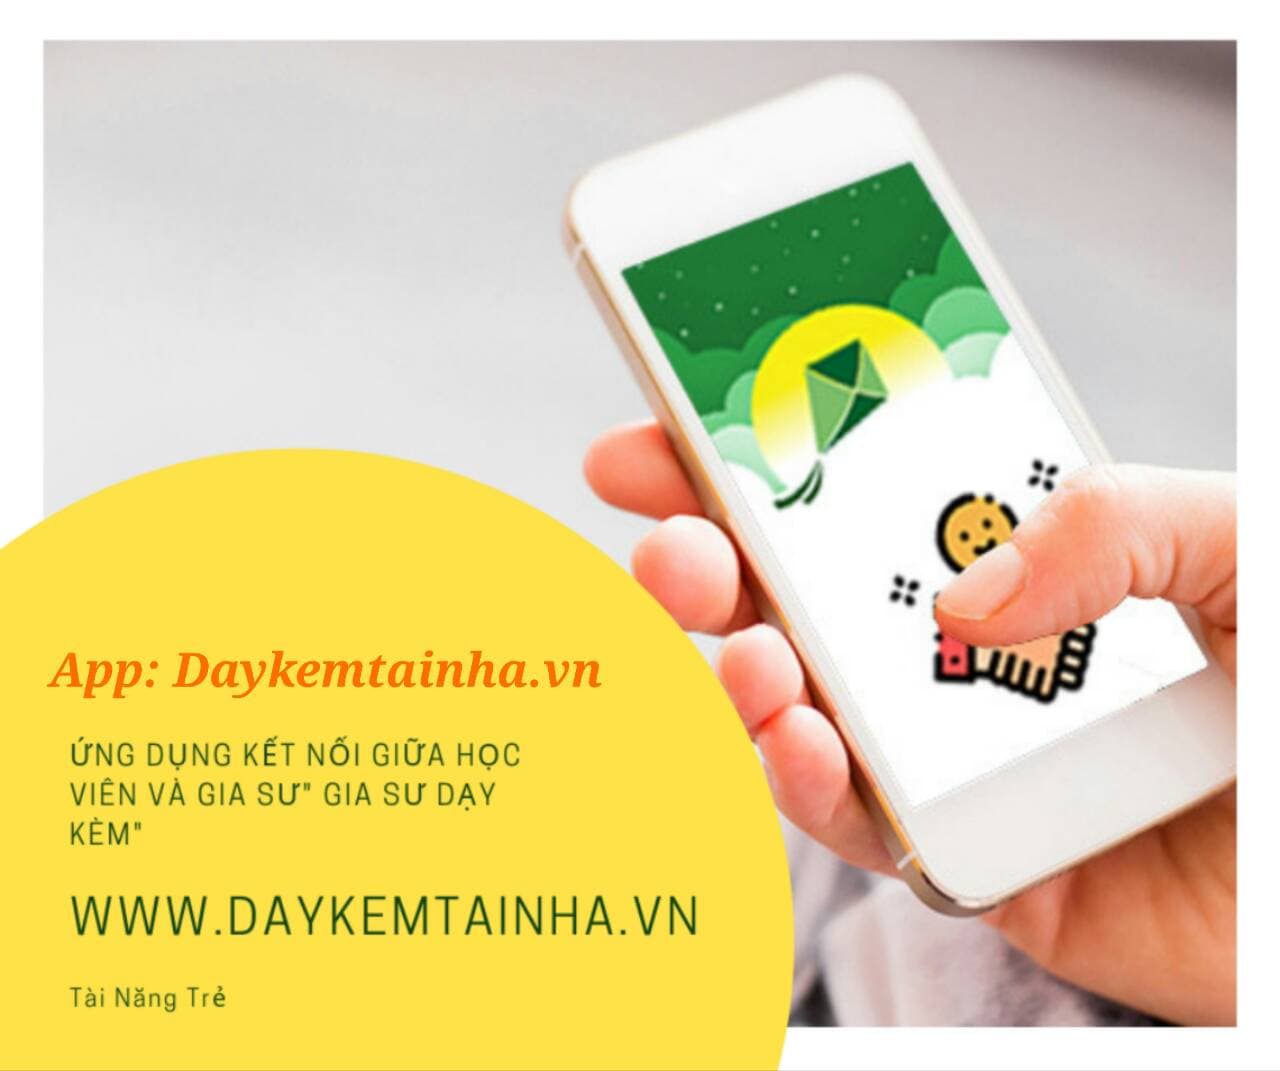 app Daykemtainha.vn